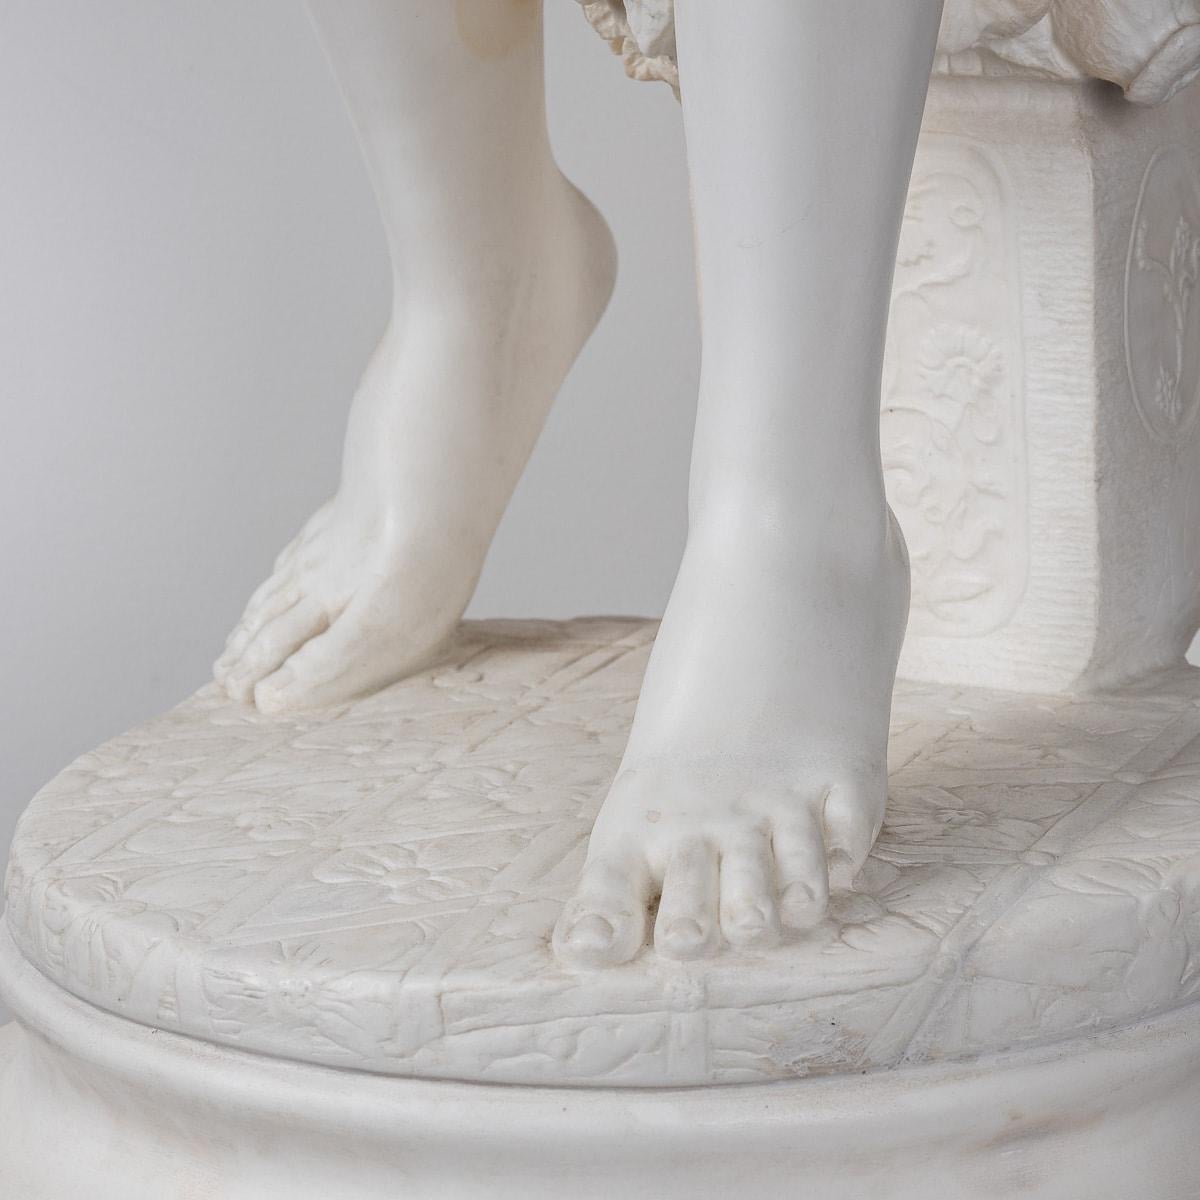 19th Century Italian Marble Figure Of A Nude, Adolfo Cipriani (1880-1930) For Sale 8